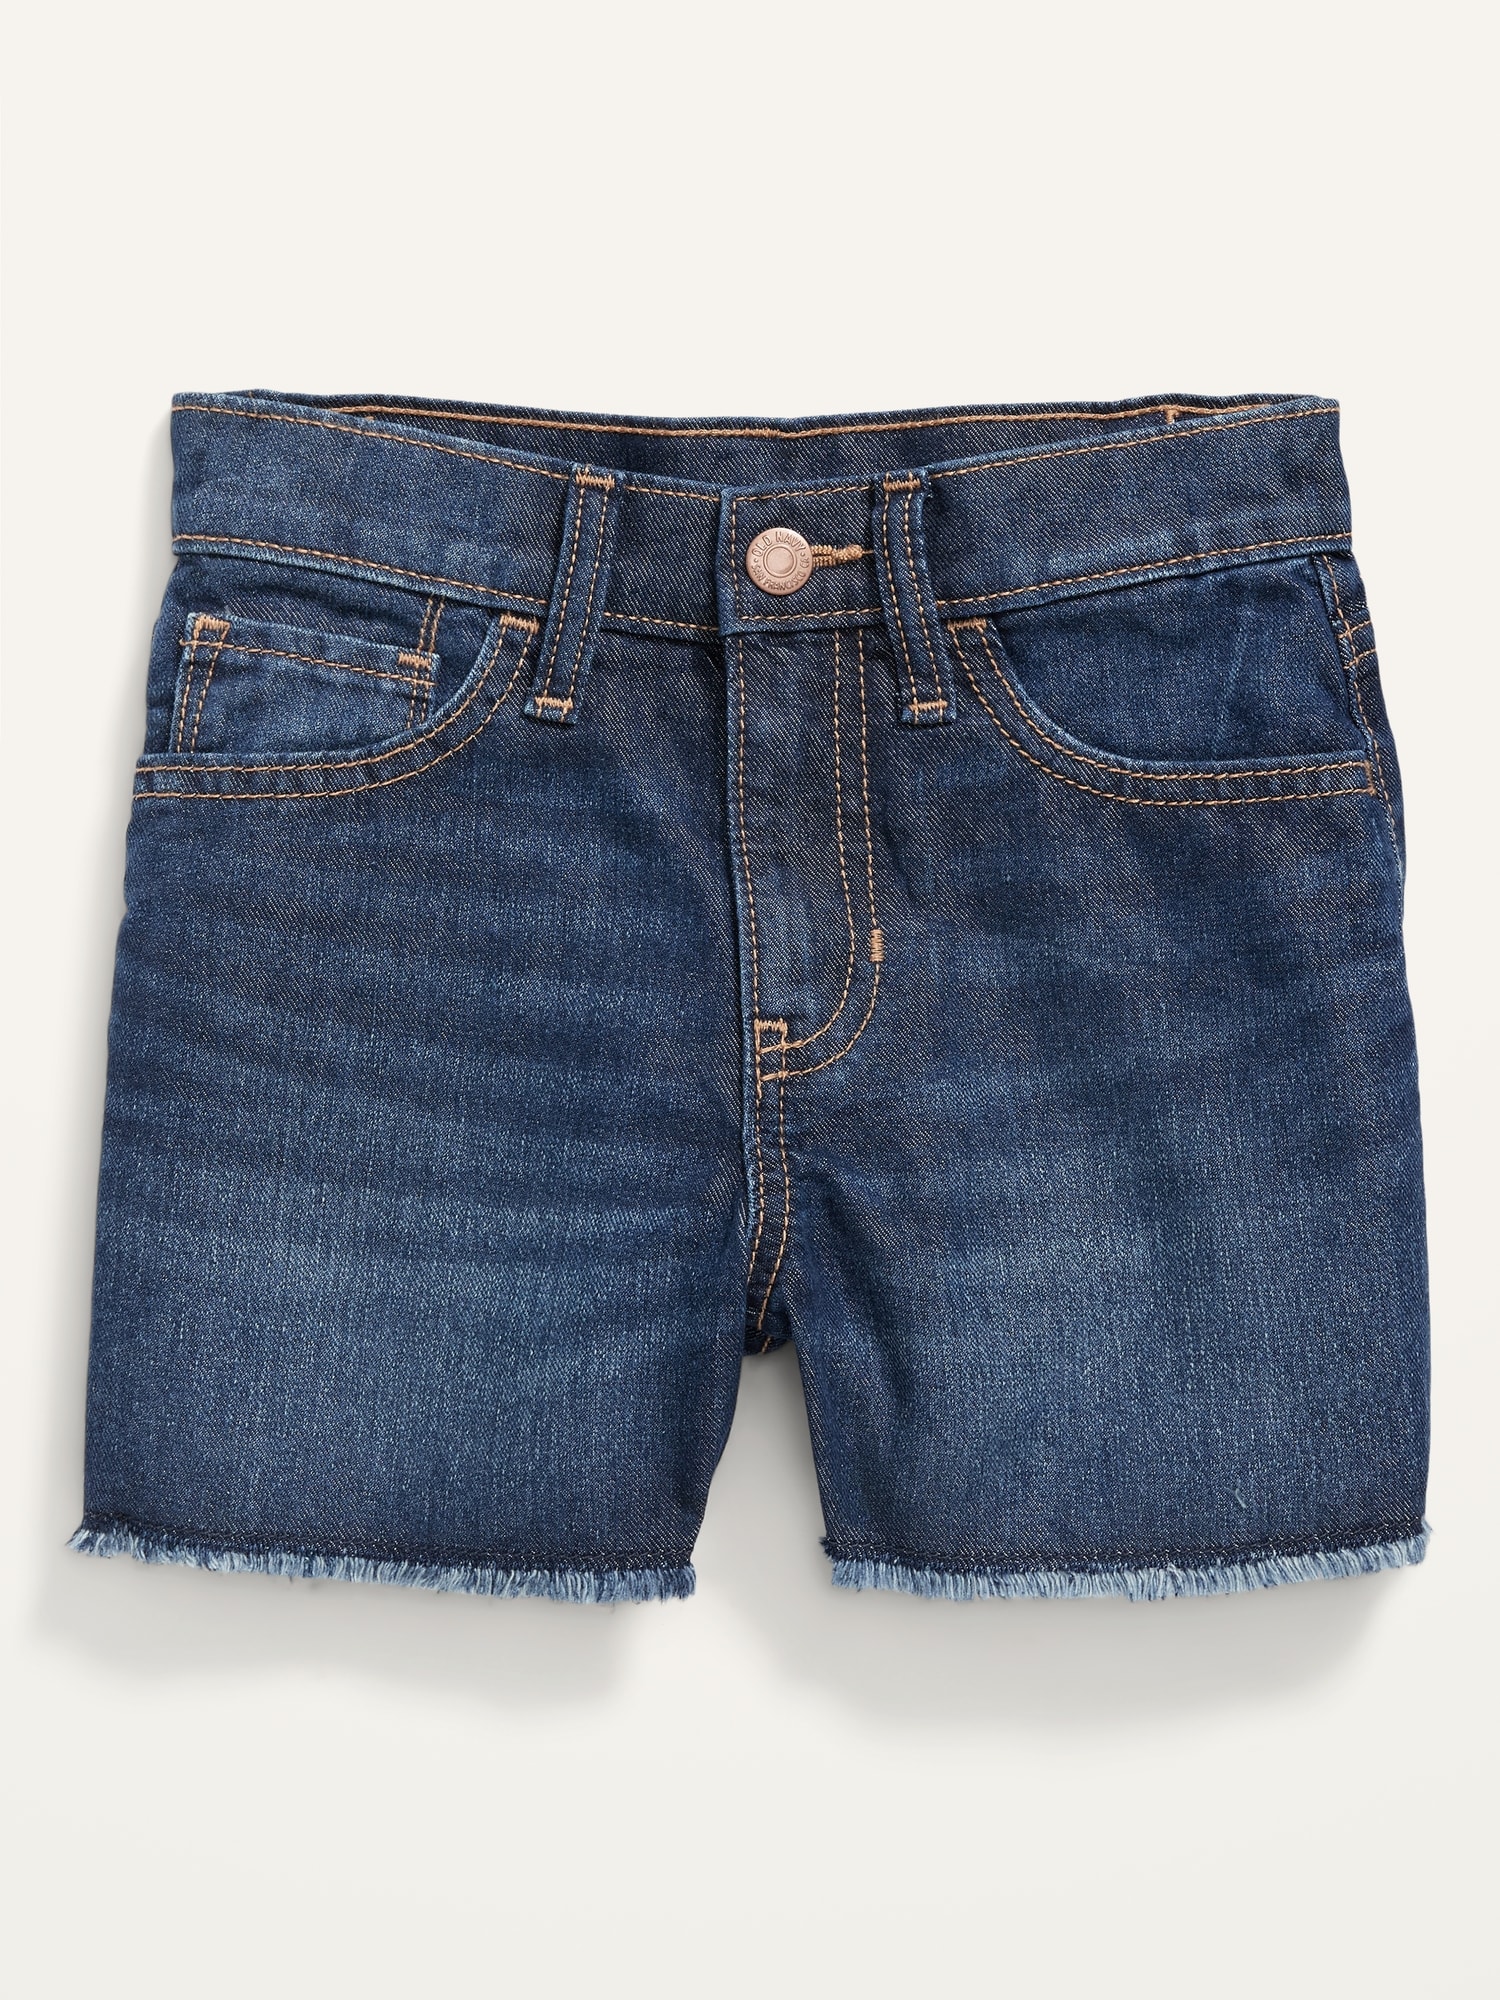 High-Waisted Frayed-Hem Jean Shorts for Girls